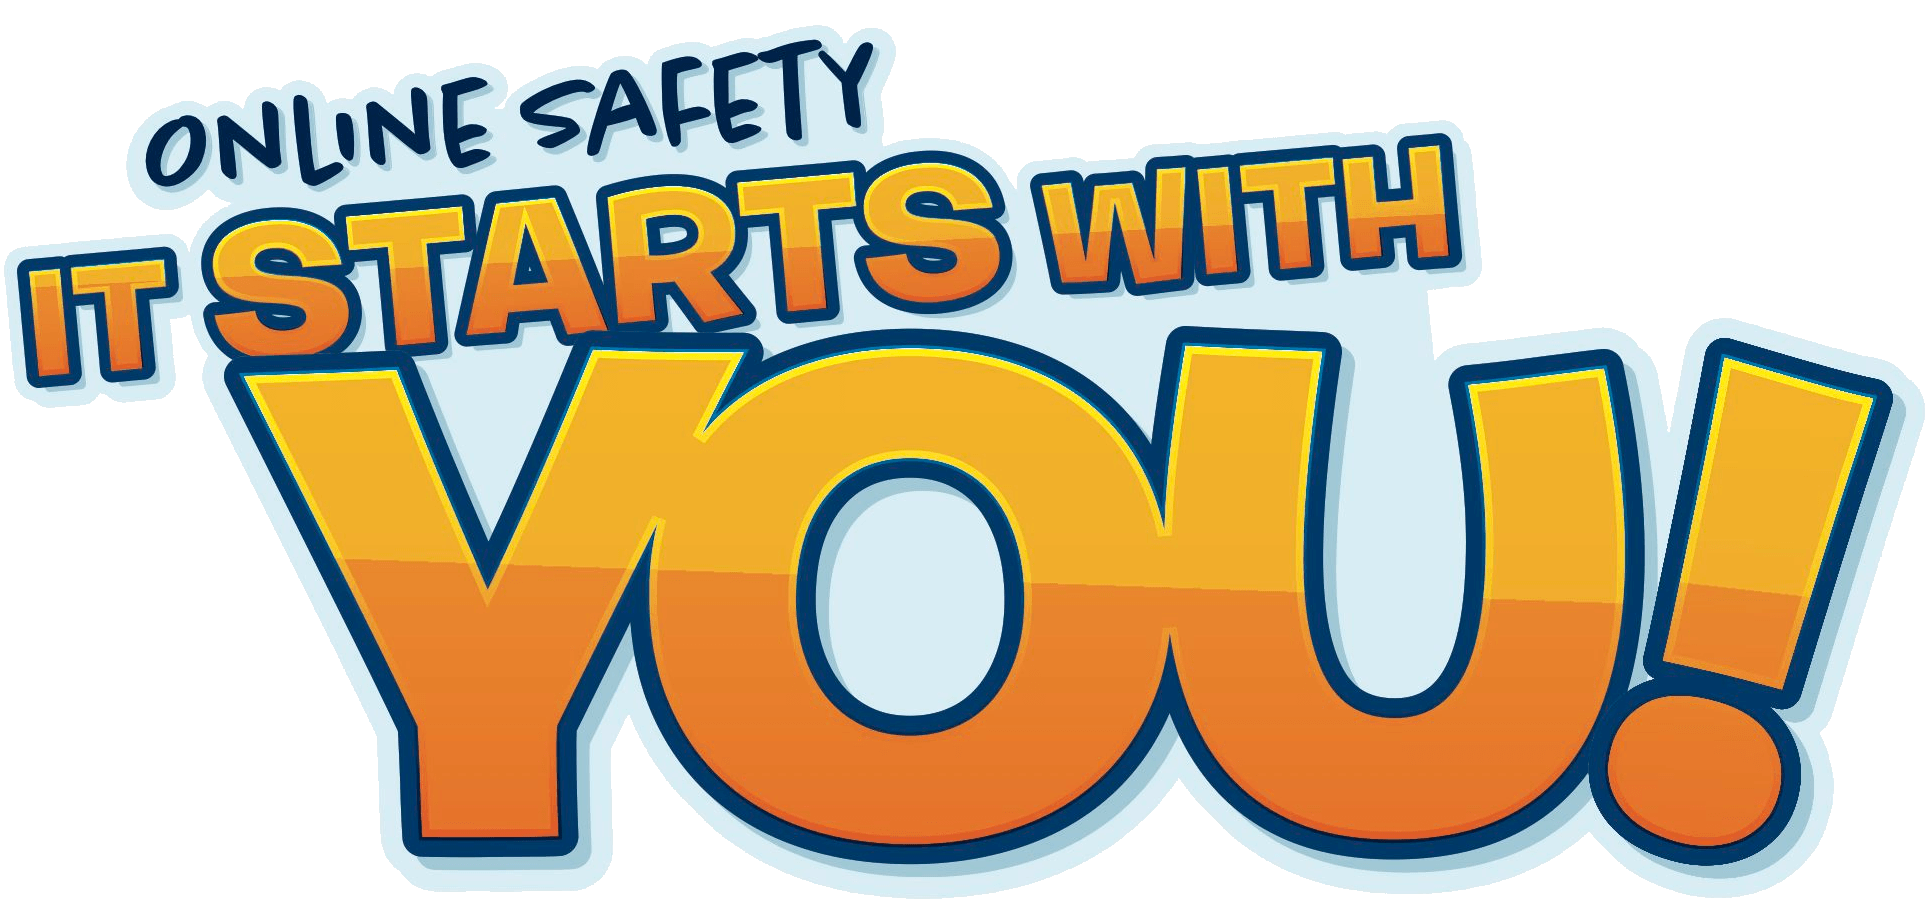 Internet Safety Logo - Safety Quiz | Club Penguin Wiki | FANDOM powered by Wikia